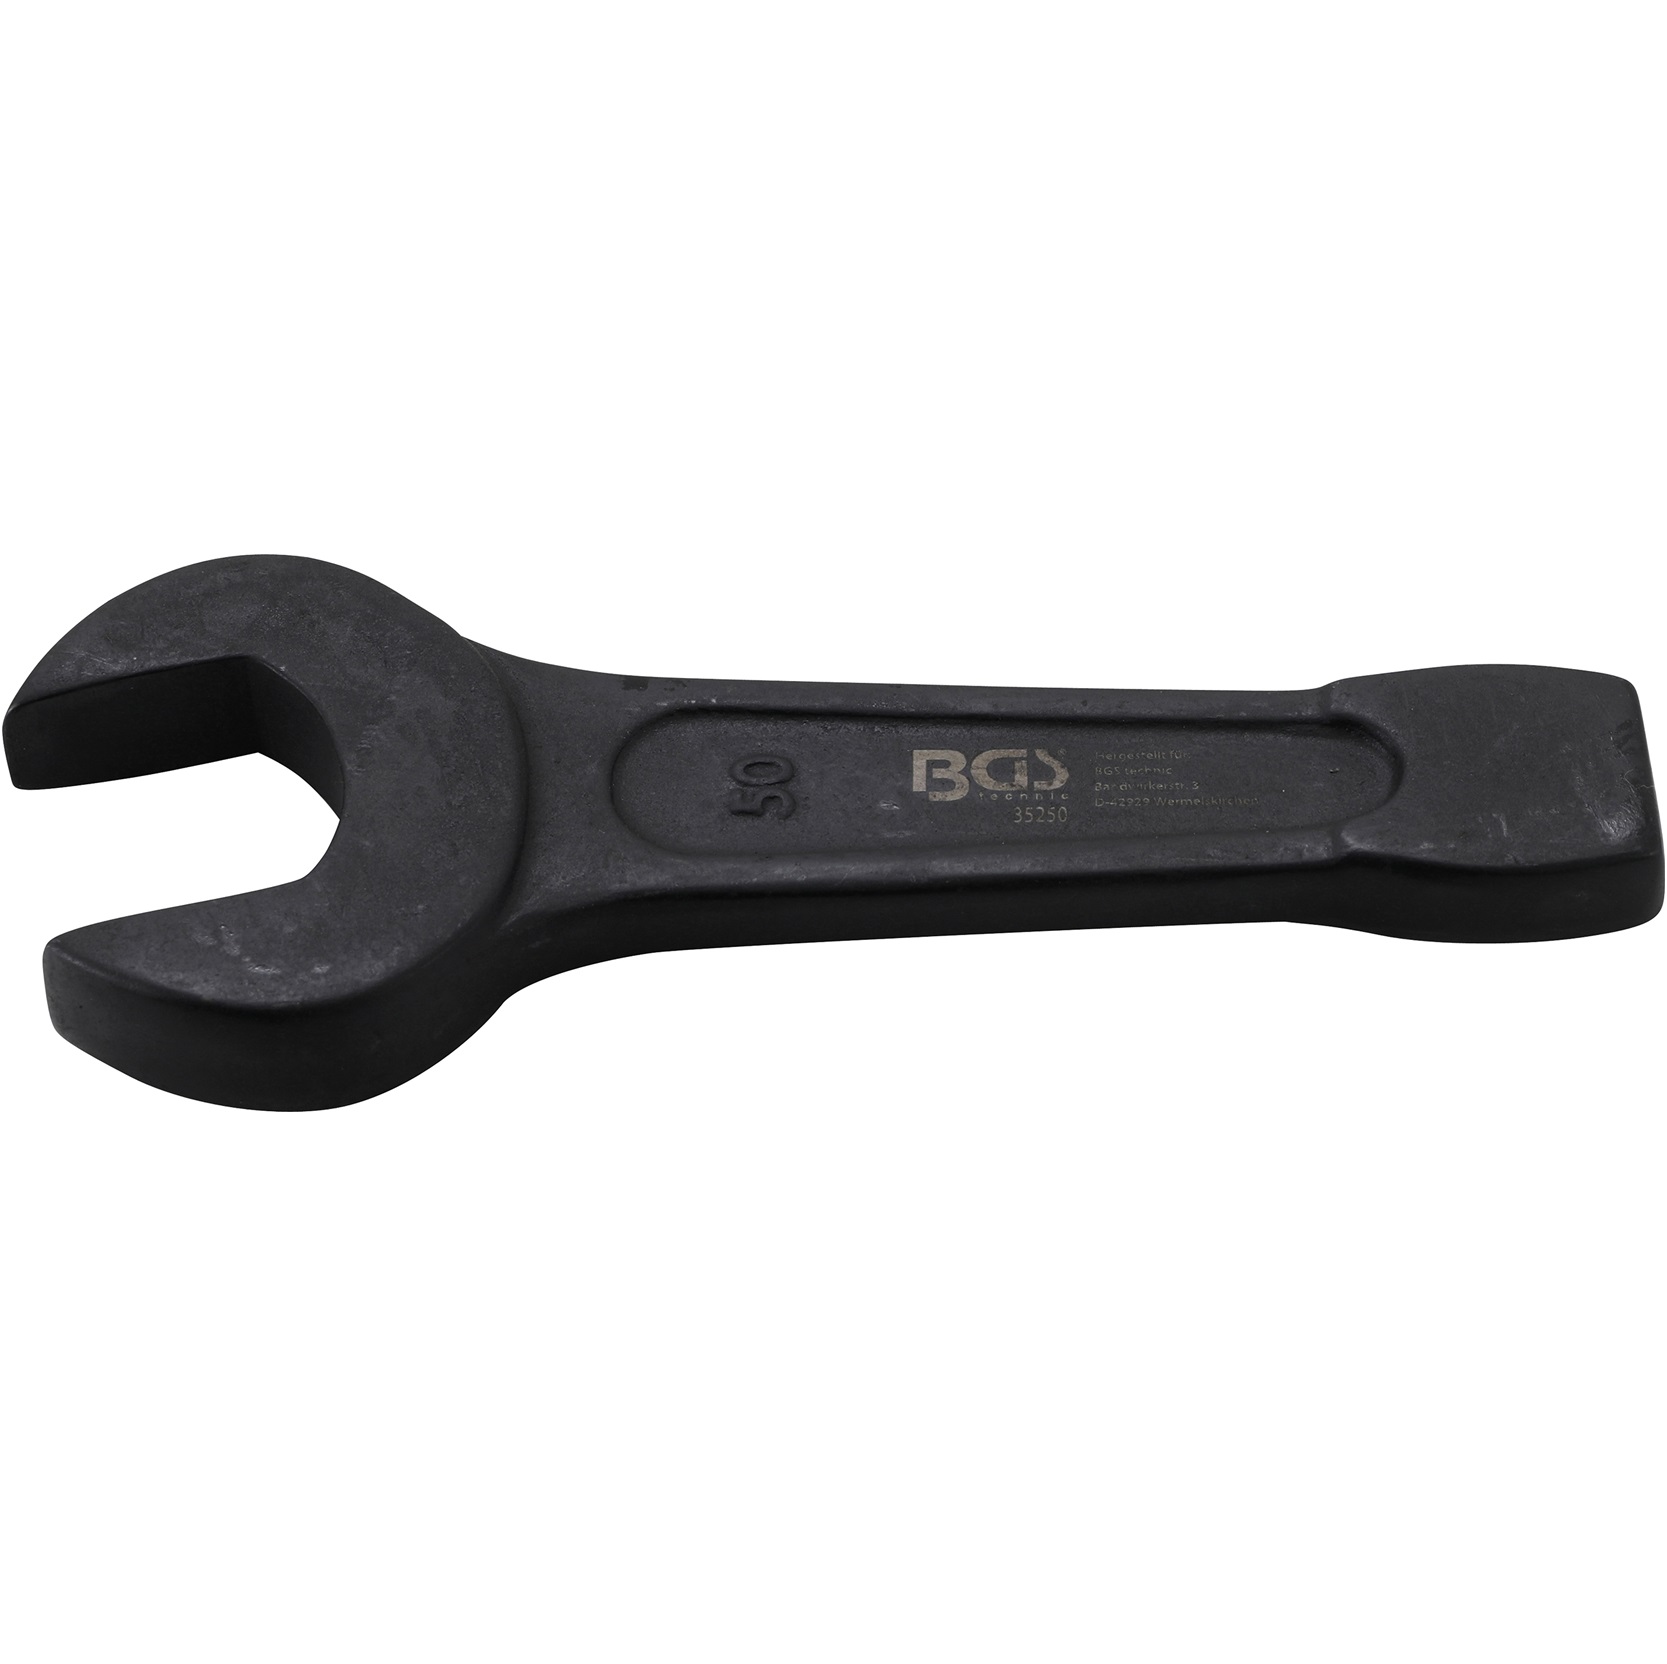 Kľúč plochý vidlicový, úderový, 50 mm, BGS 35250